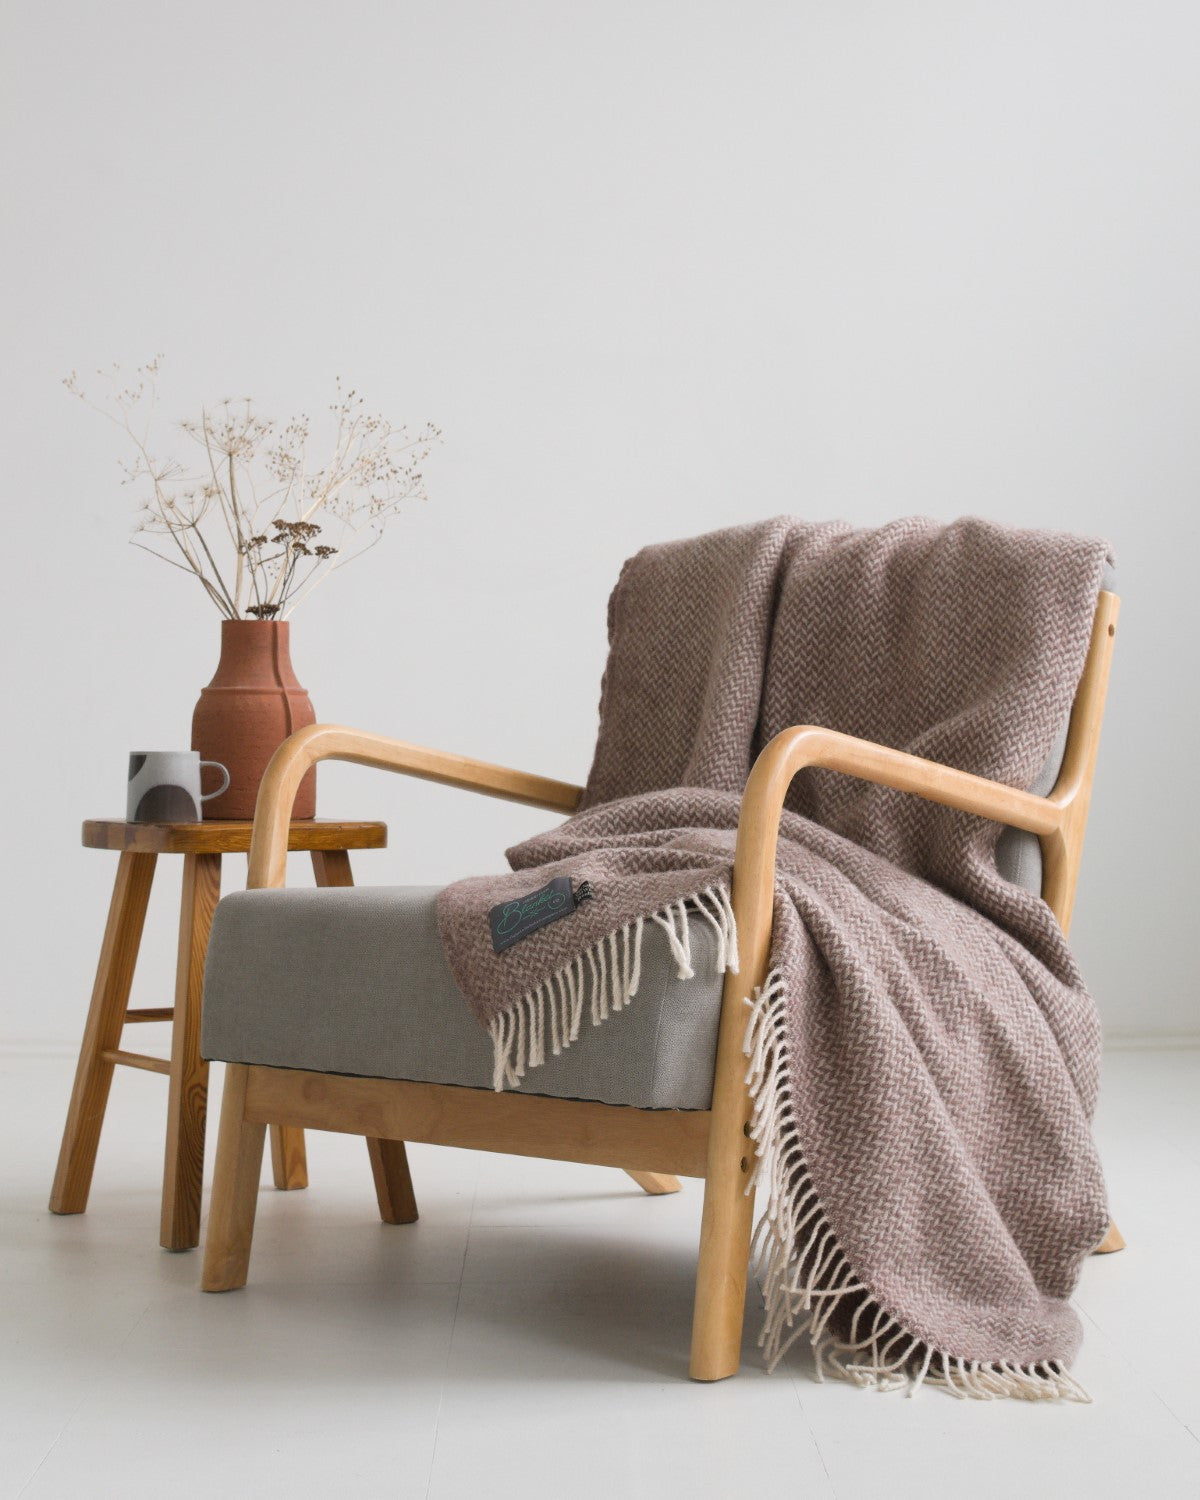 Large brown herringbone wool blanket draped over a lounge chair